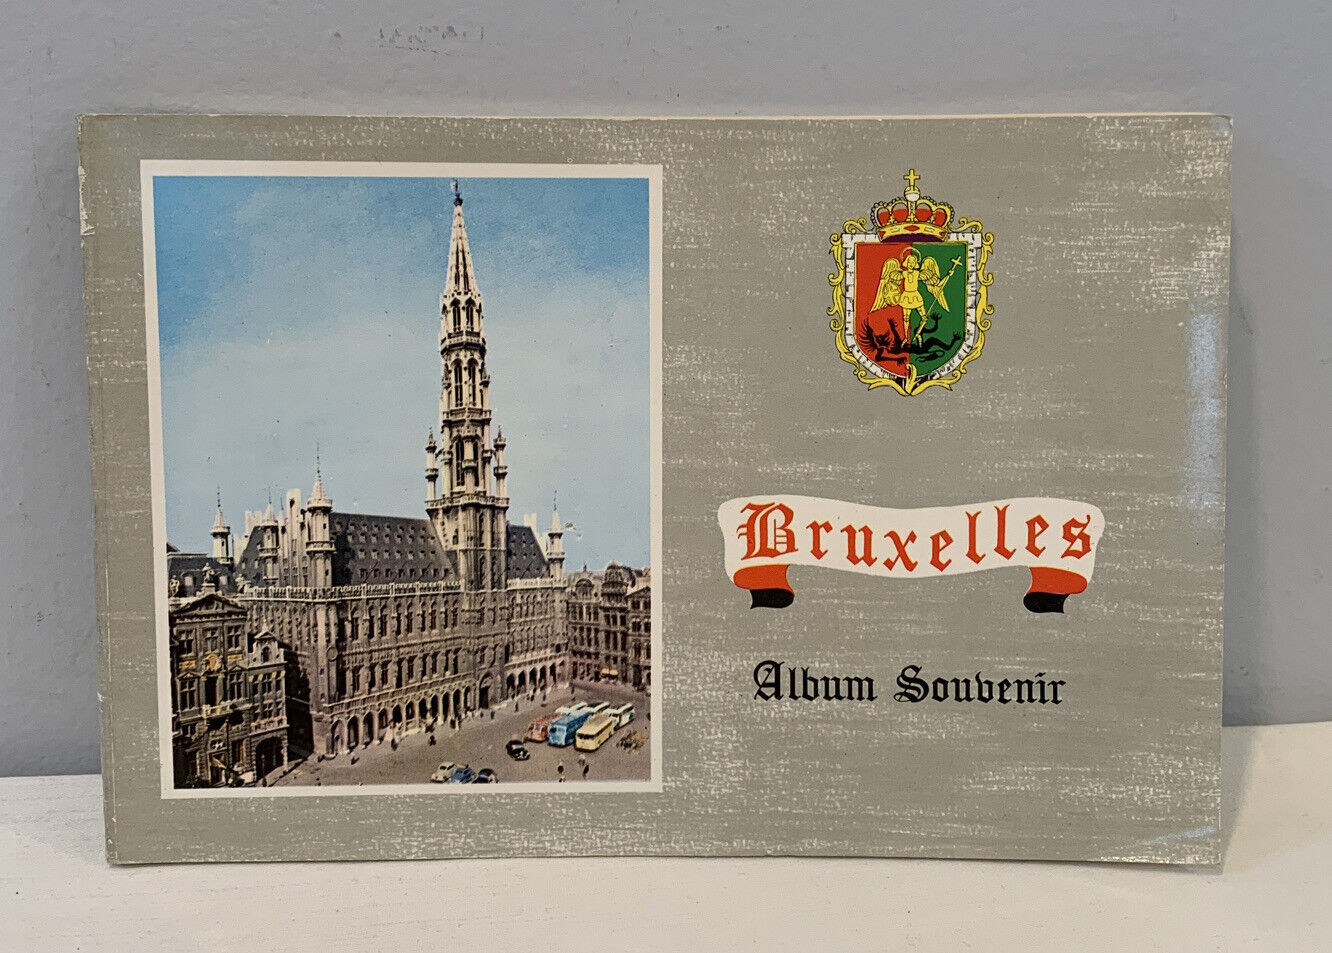 VTG 1950s All Color Souvenir Album of Brussels, Belgium 64 Pages In 4 Languages